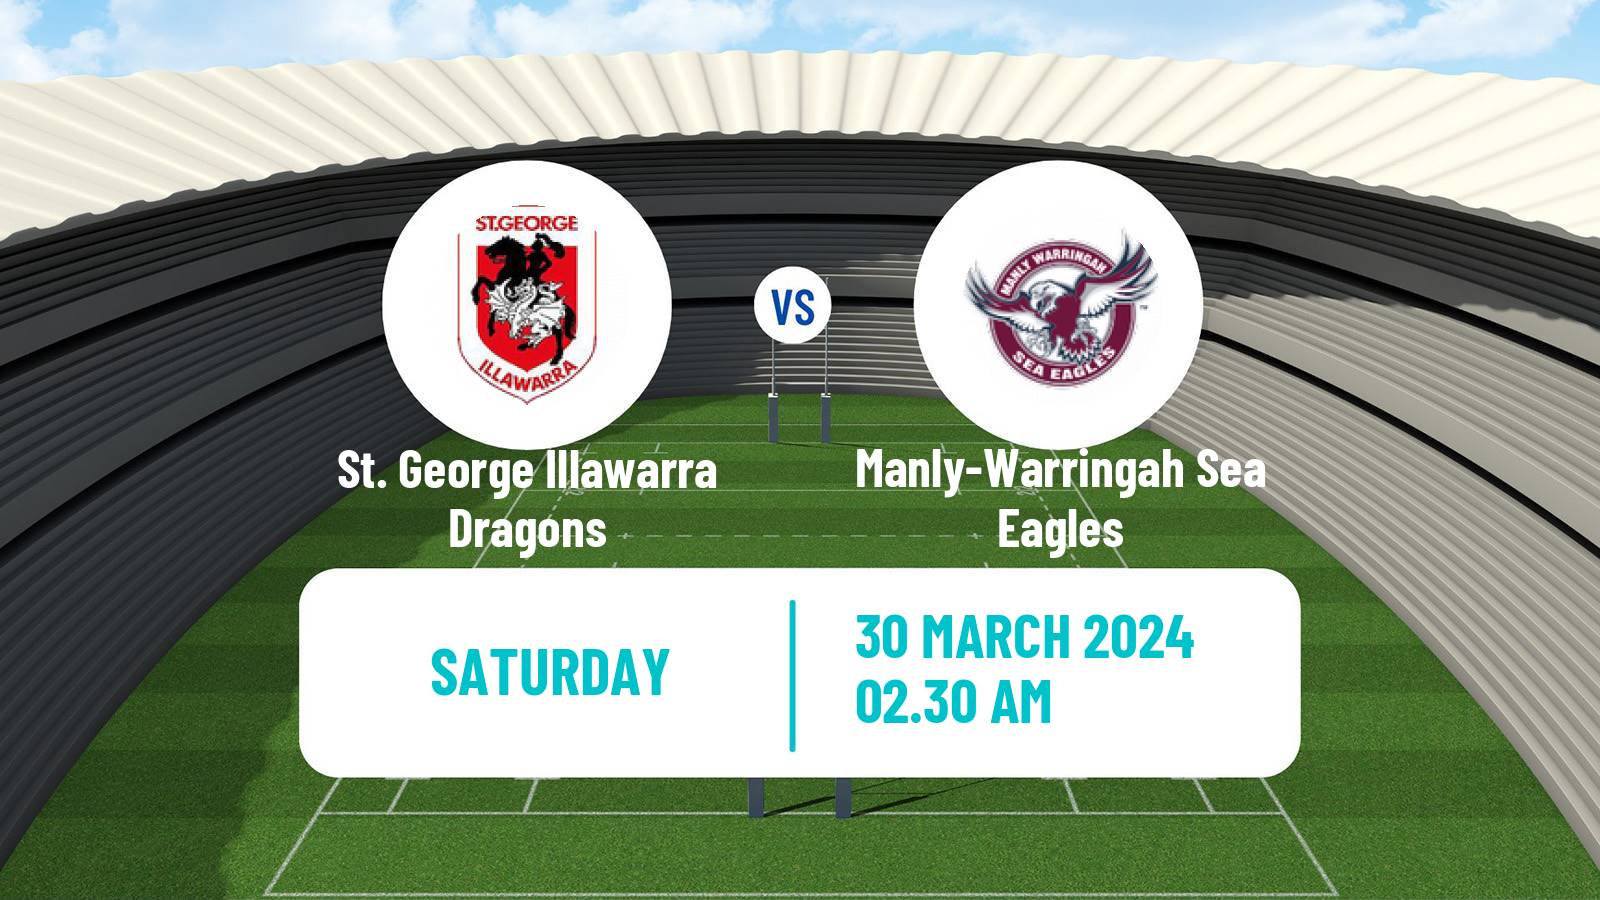 Rugby league Australian NRL St. George Illawarra Dragons - Manly-Warringah Sea Eagles